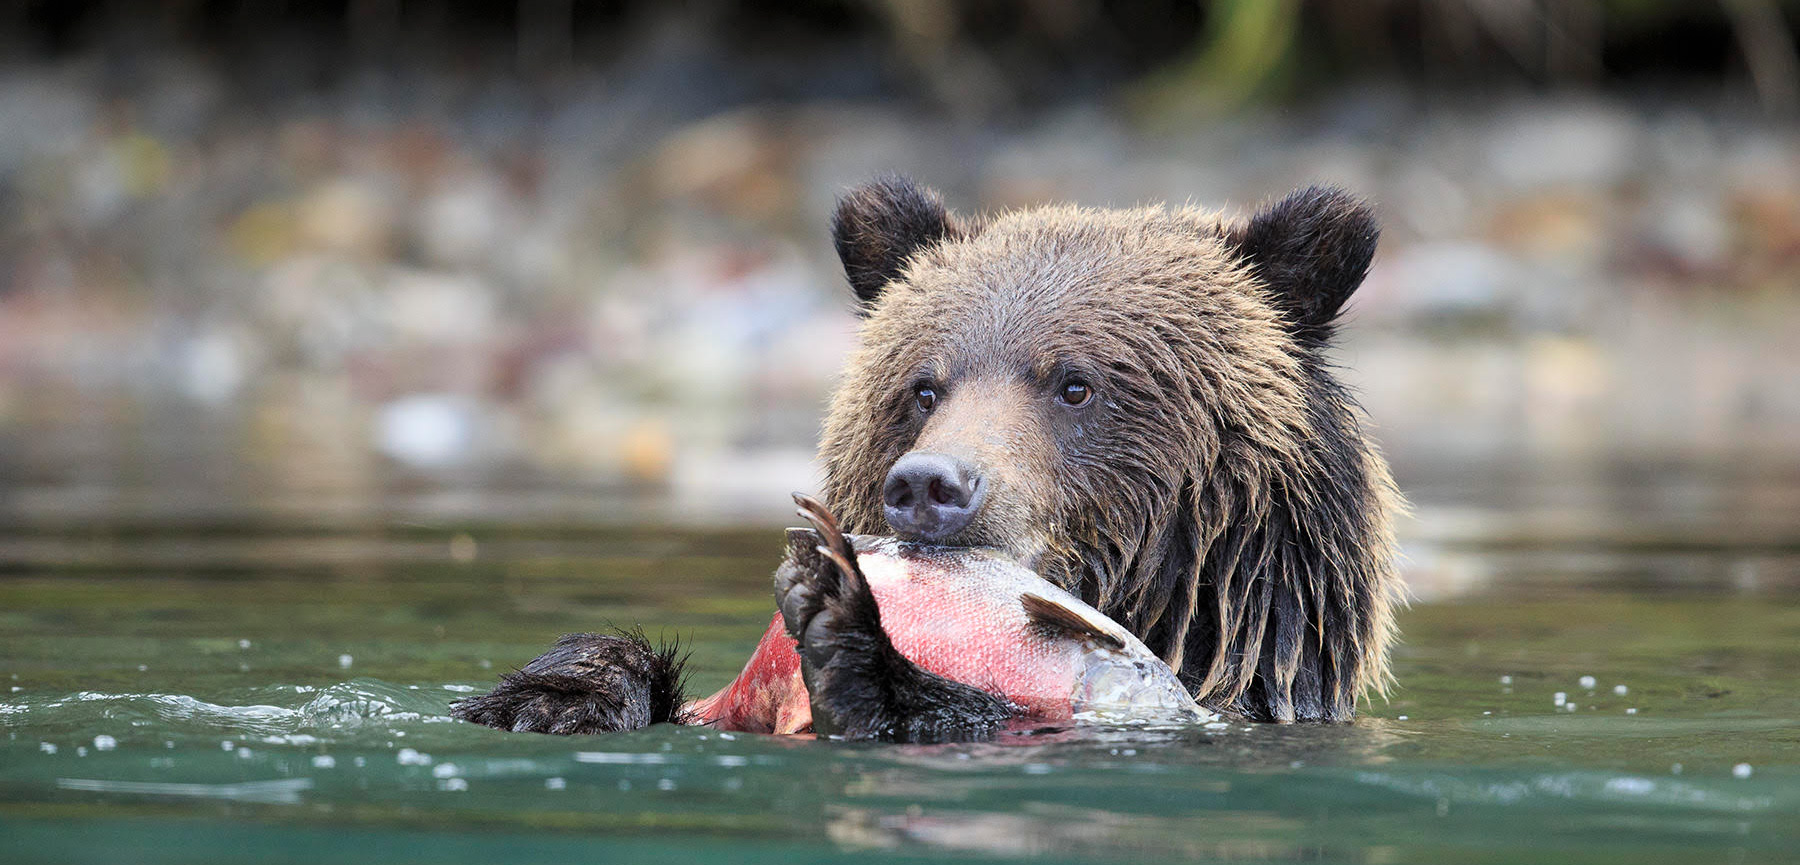 grizzly bead eating a slamon